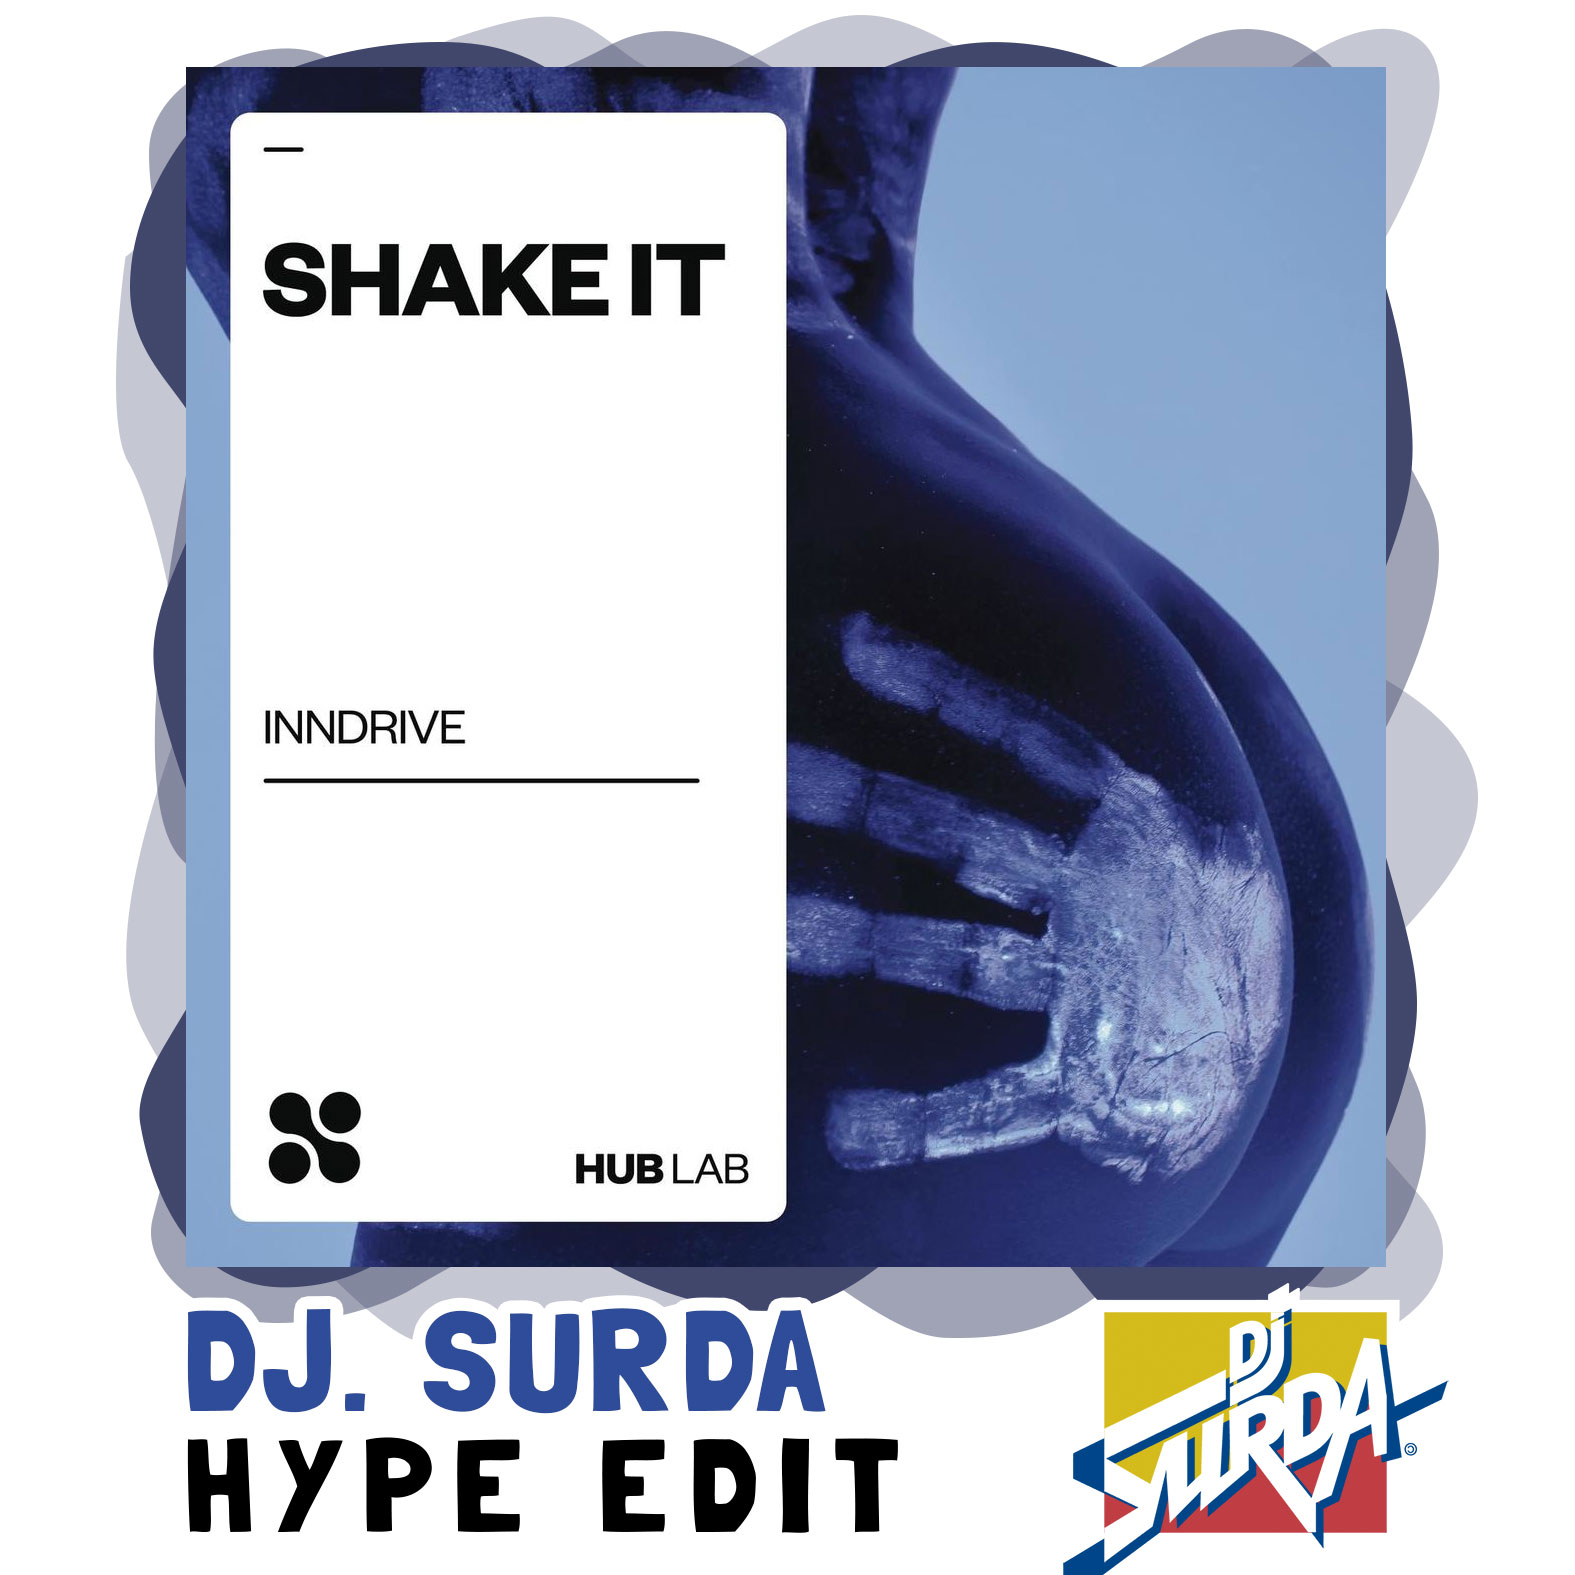 INNDRIVE vs. Splack Pack – Shake It (Dj. Surda Shake That Ass Bitch Vocal Hype Intro-Radio Edit)